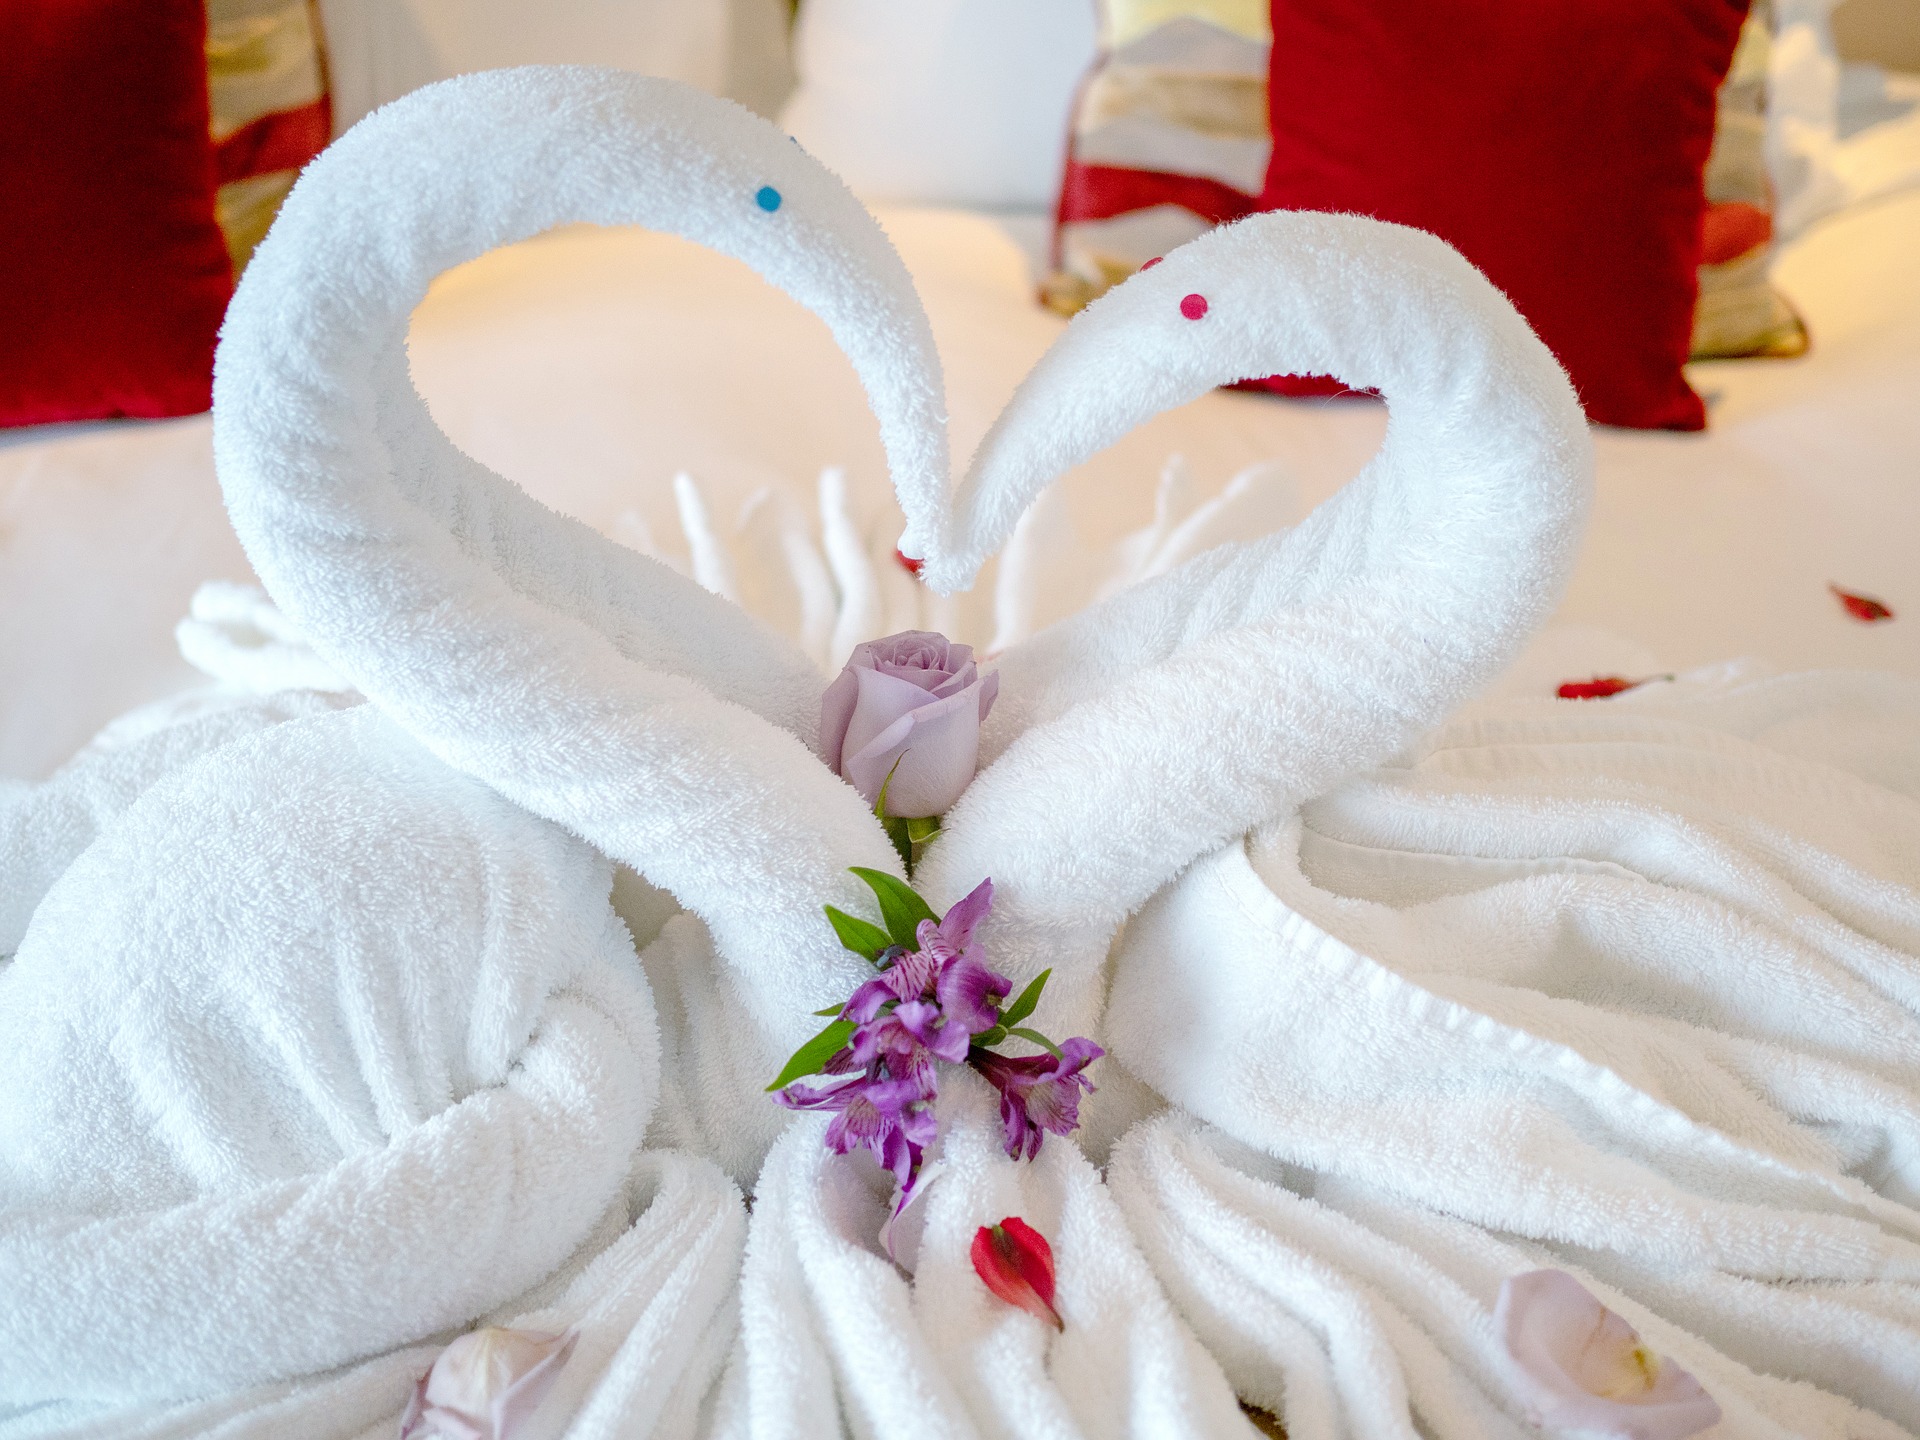 Romantic towel animal swans on a cruise ship (source: LAWJR, Pixabay)